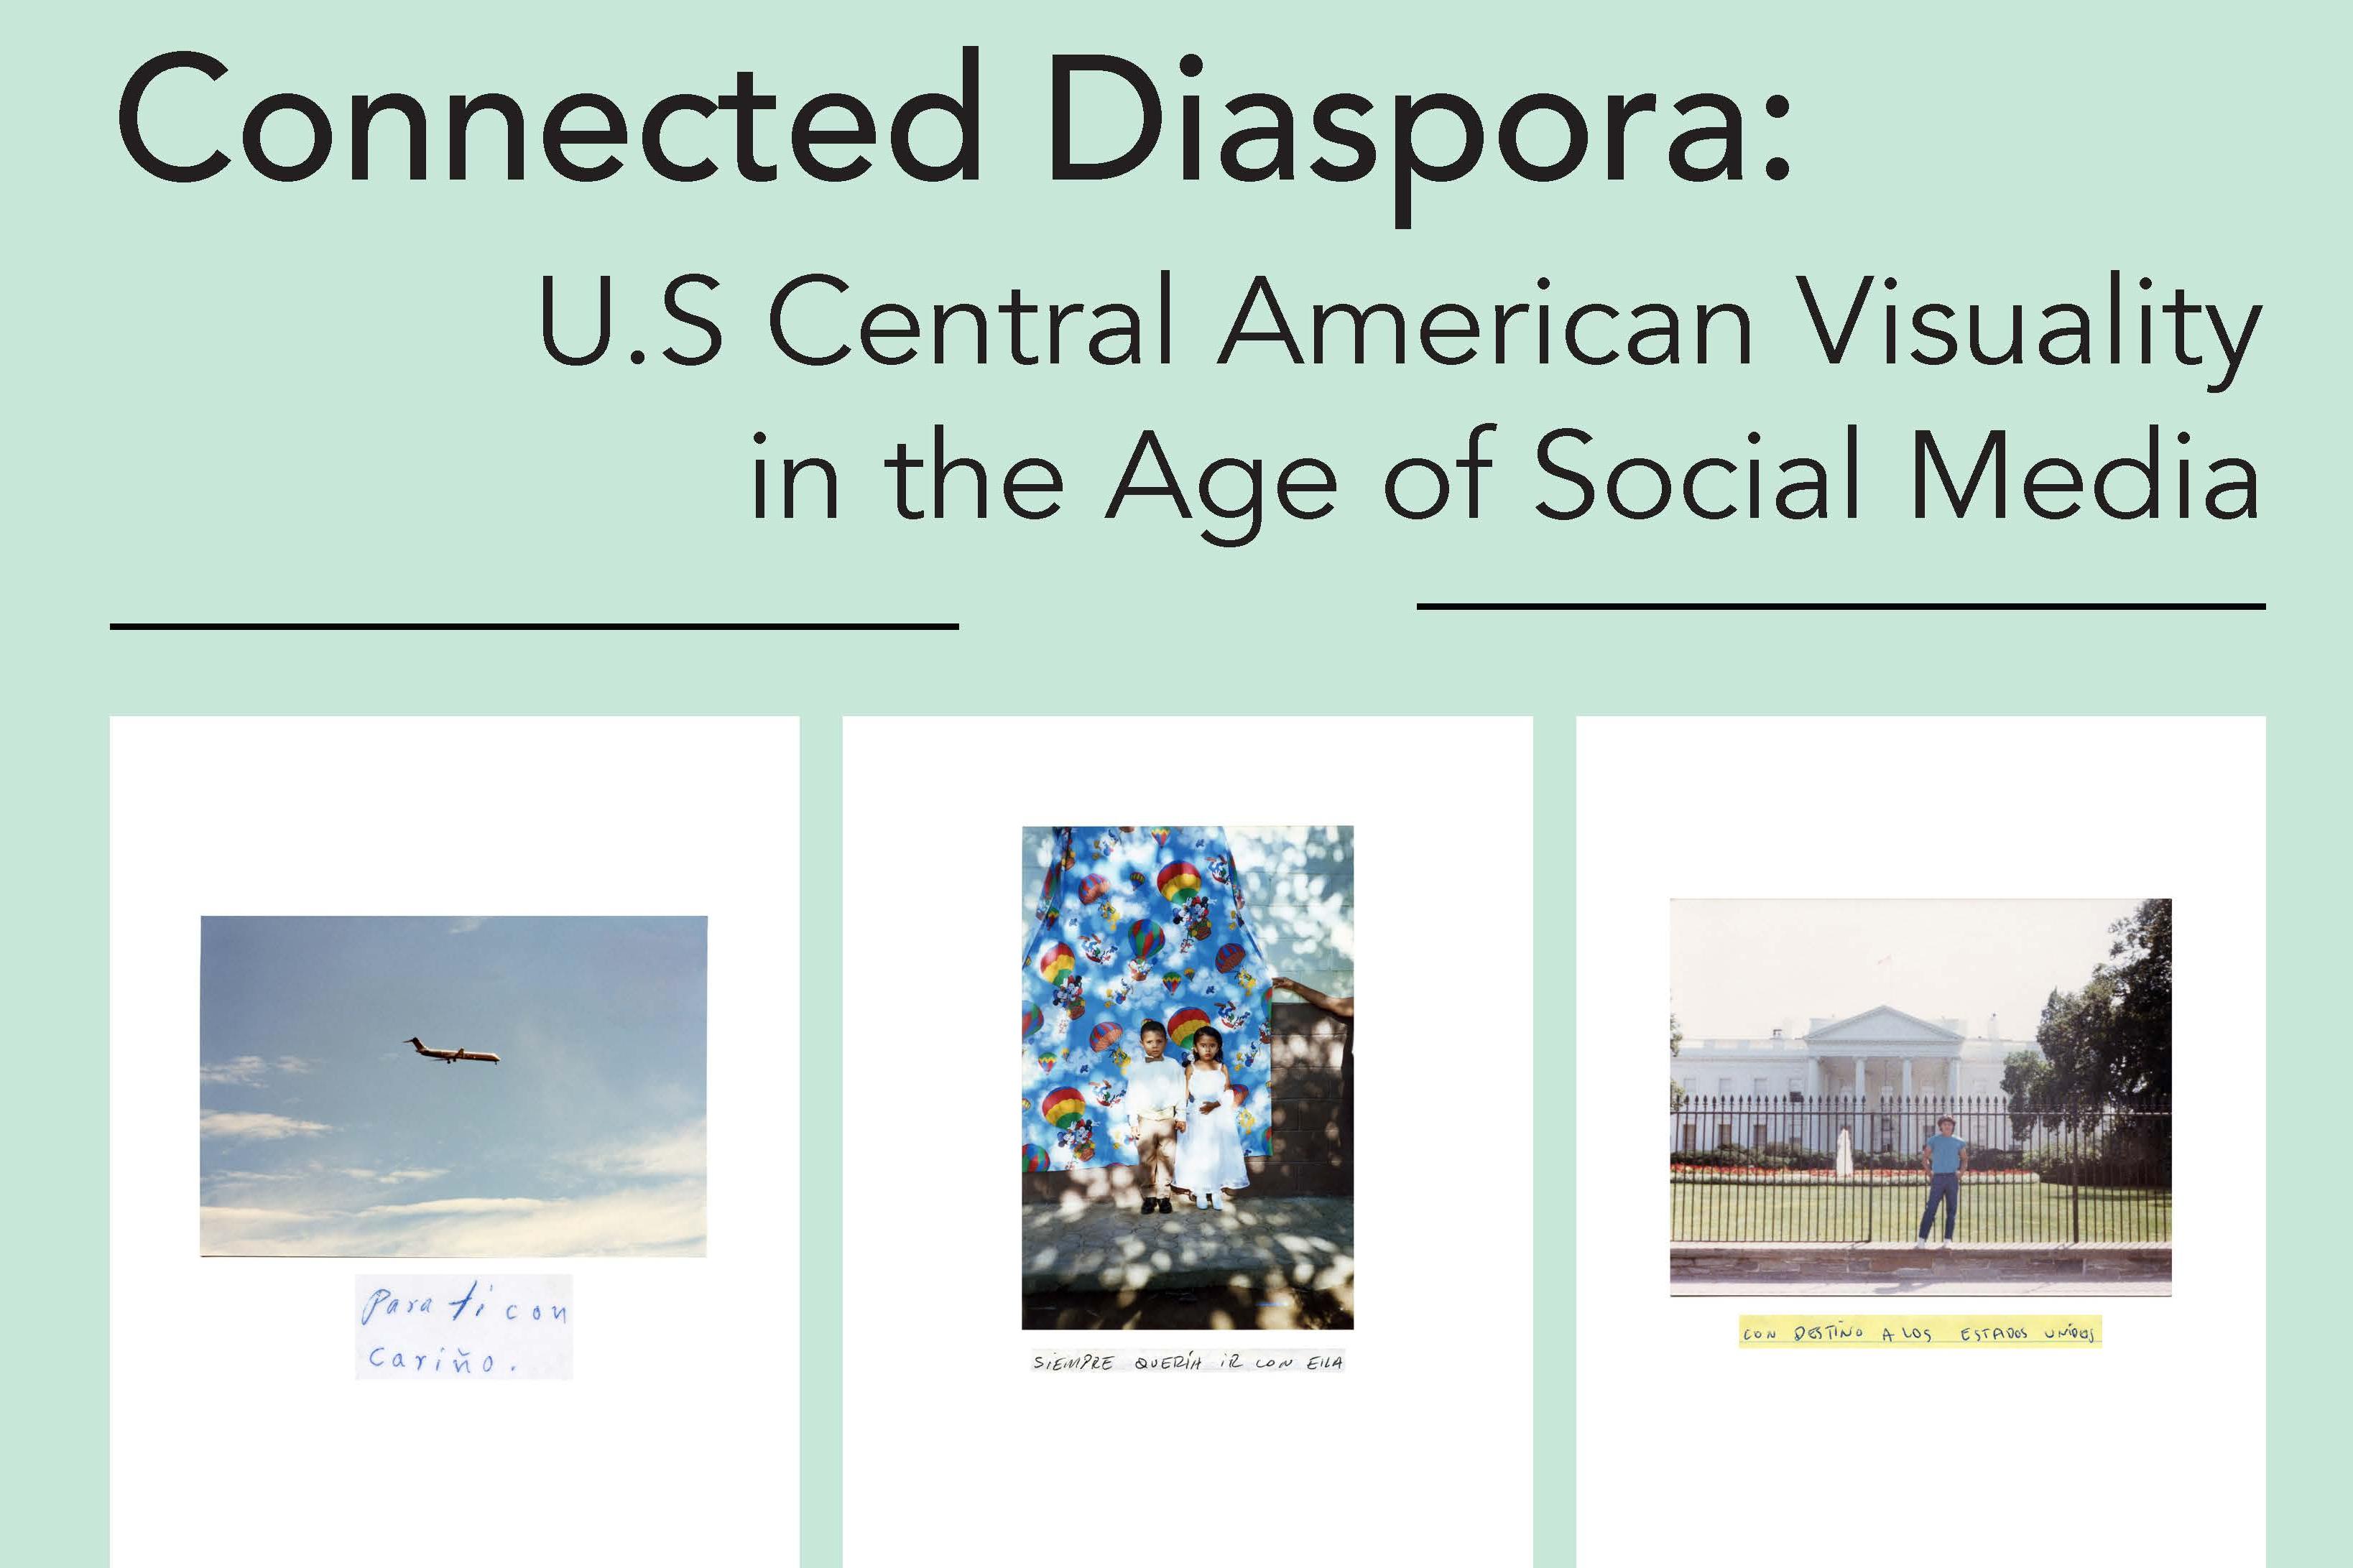 Connected Diaspora flyer